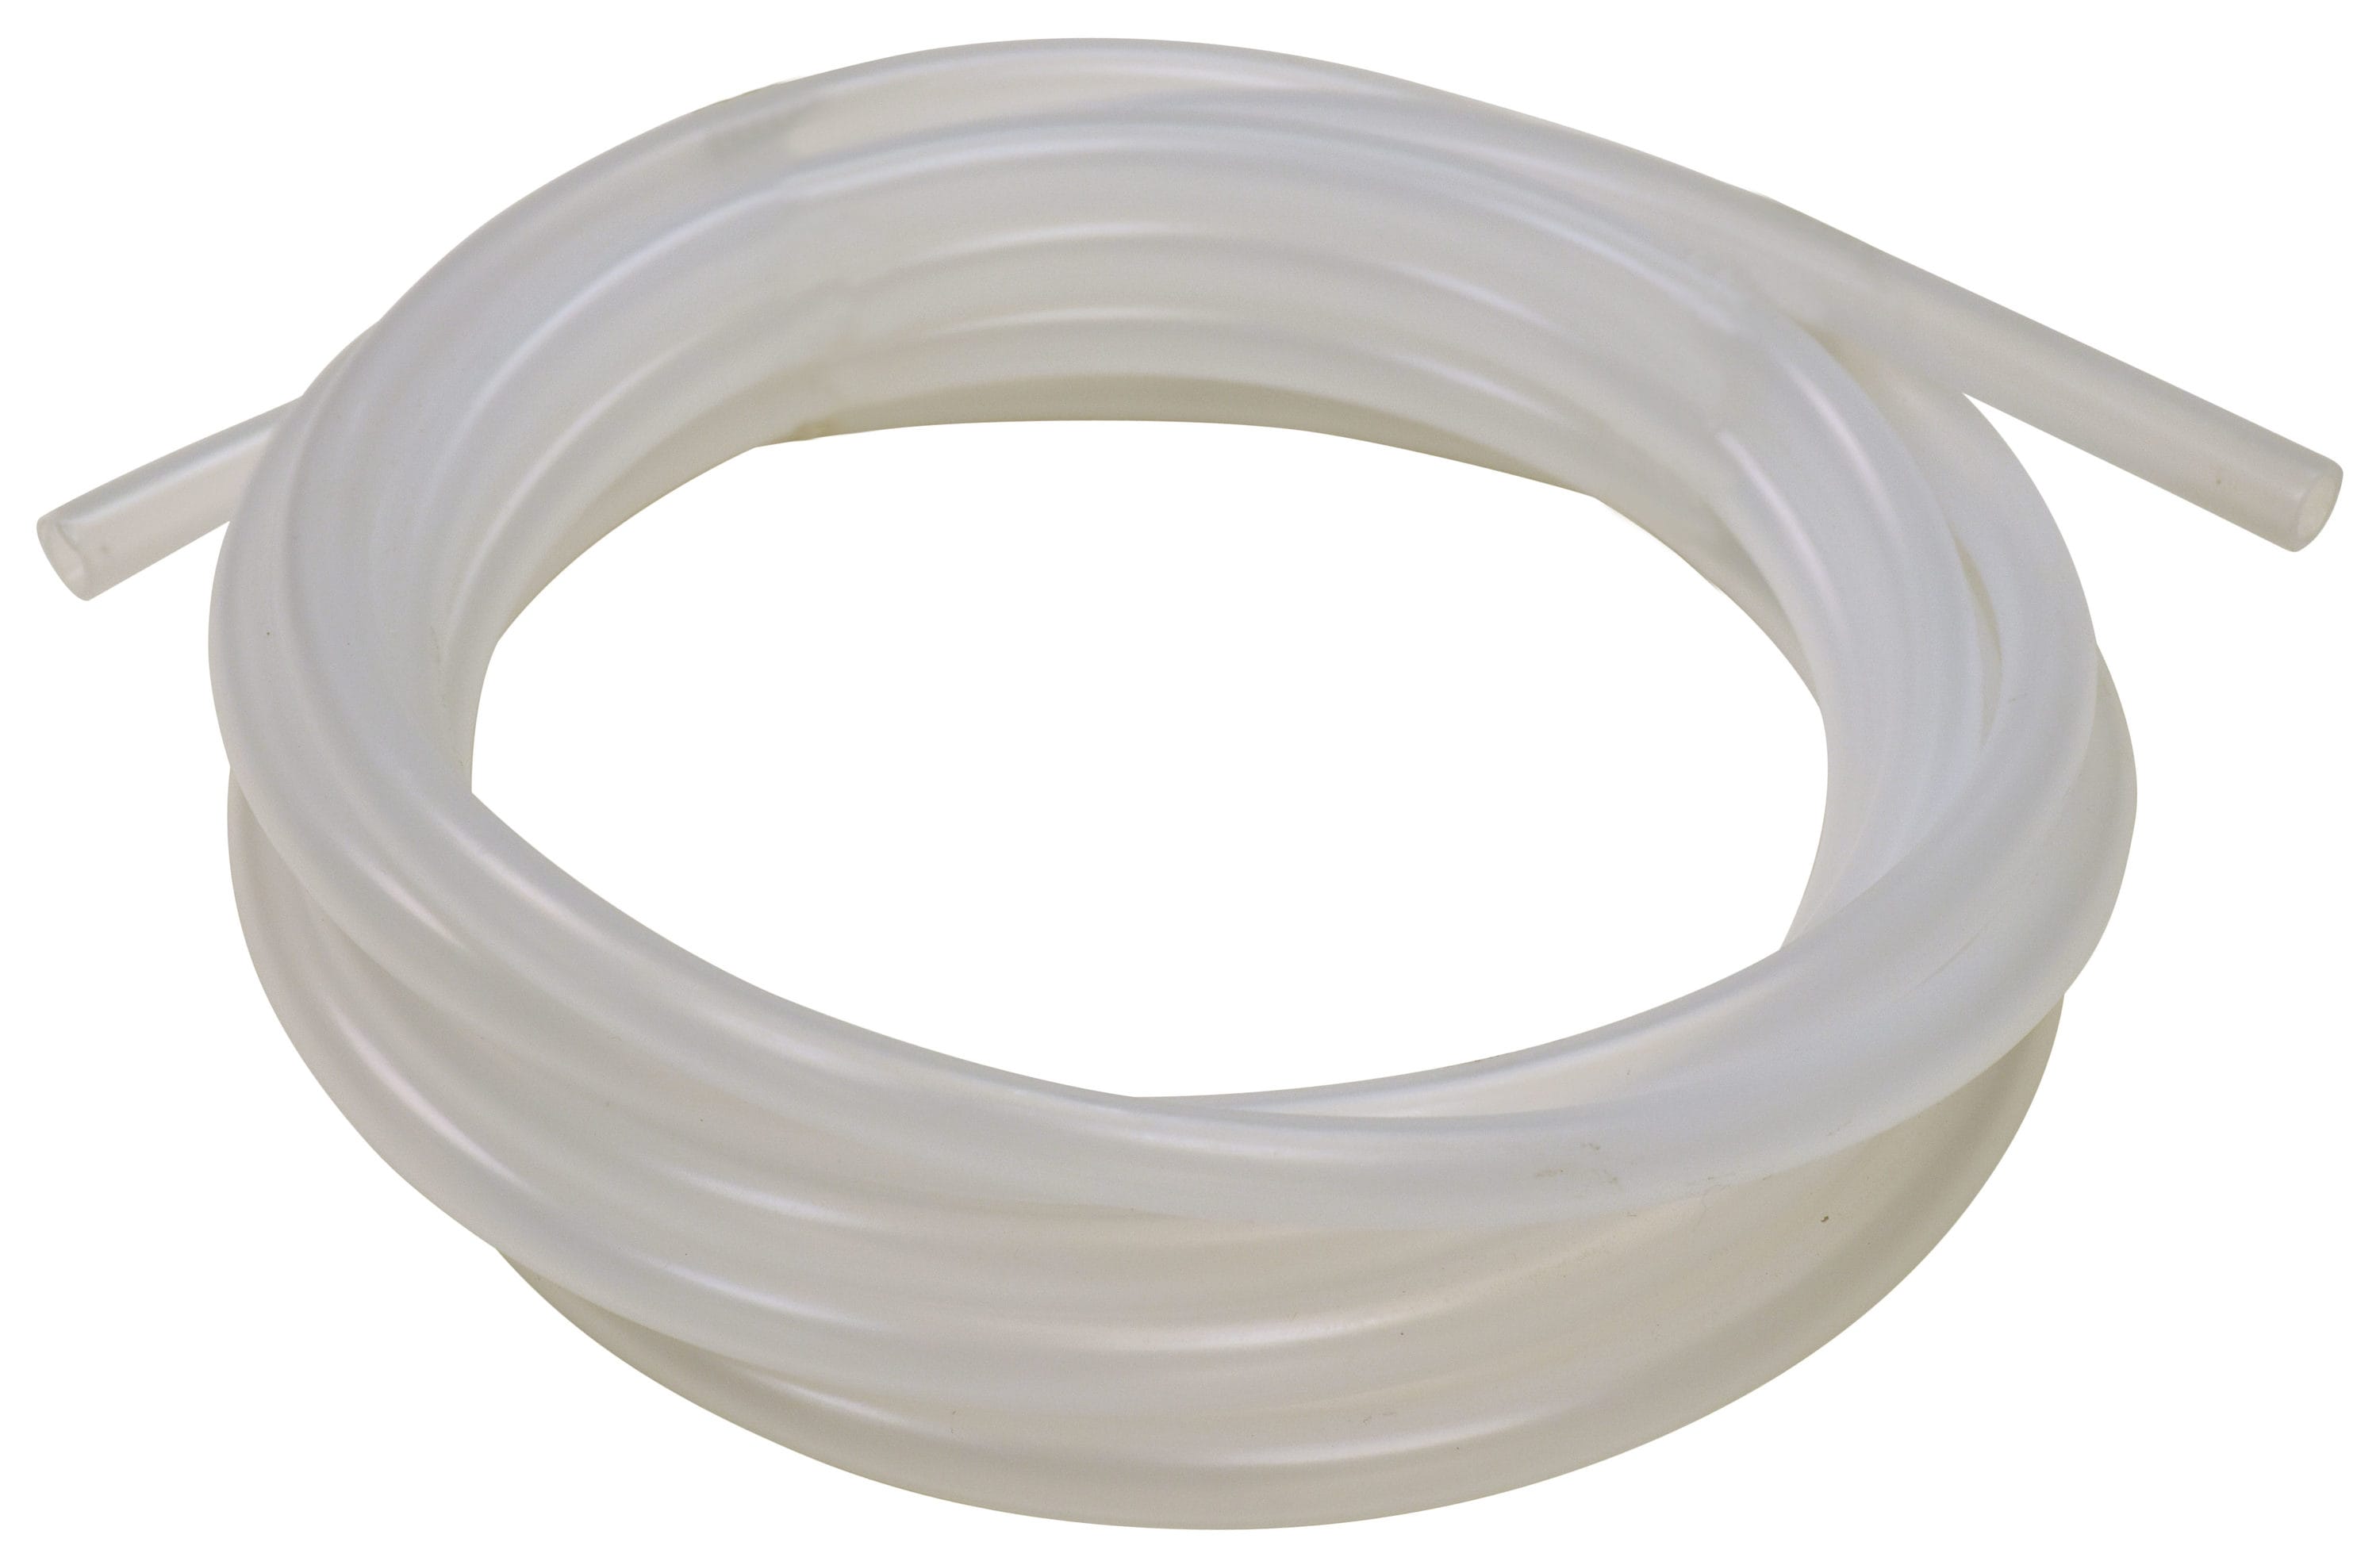 Polyethylene tubing Tubing & Hoses at